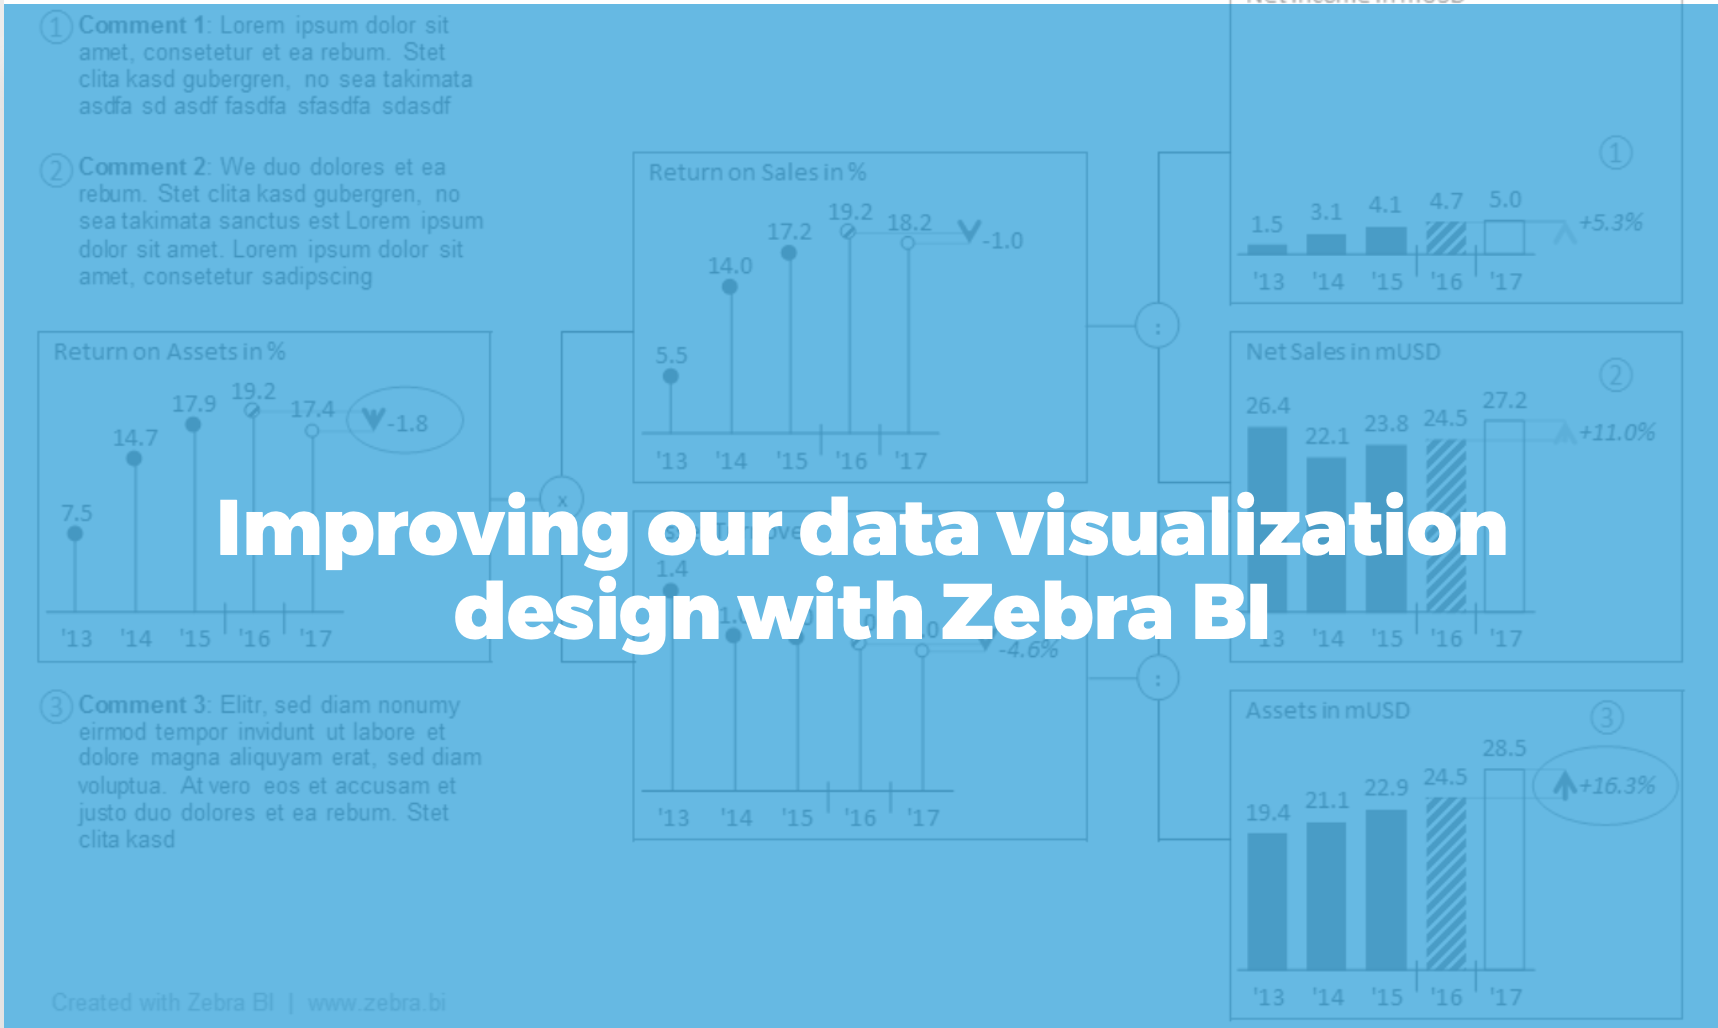 Bismart incorporates visuals from Zebra BI